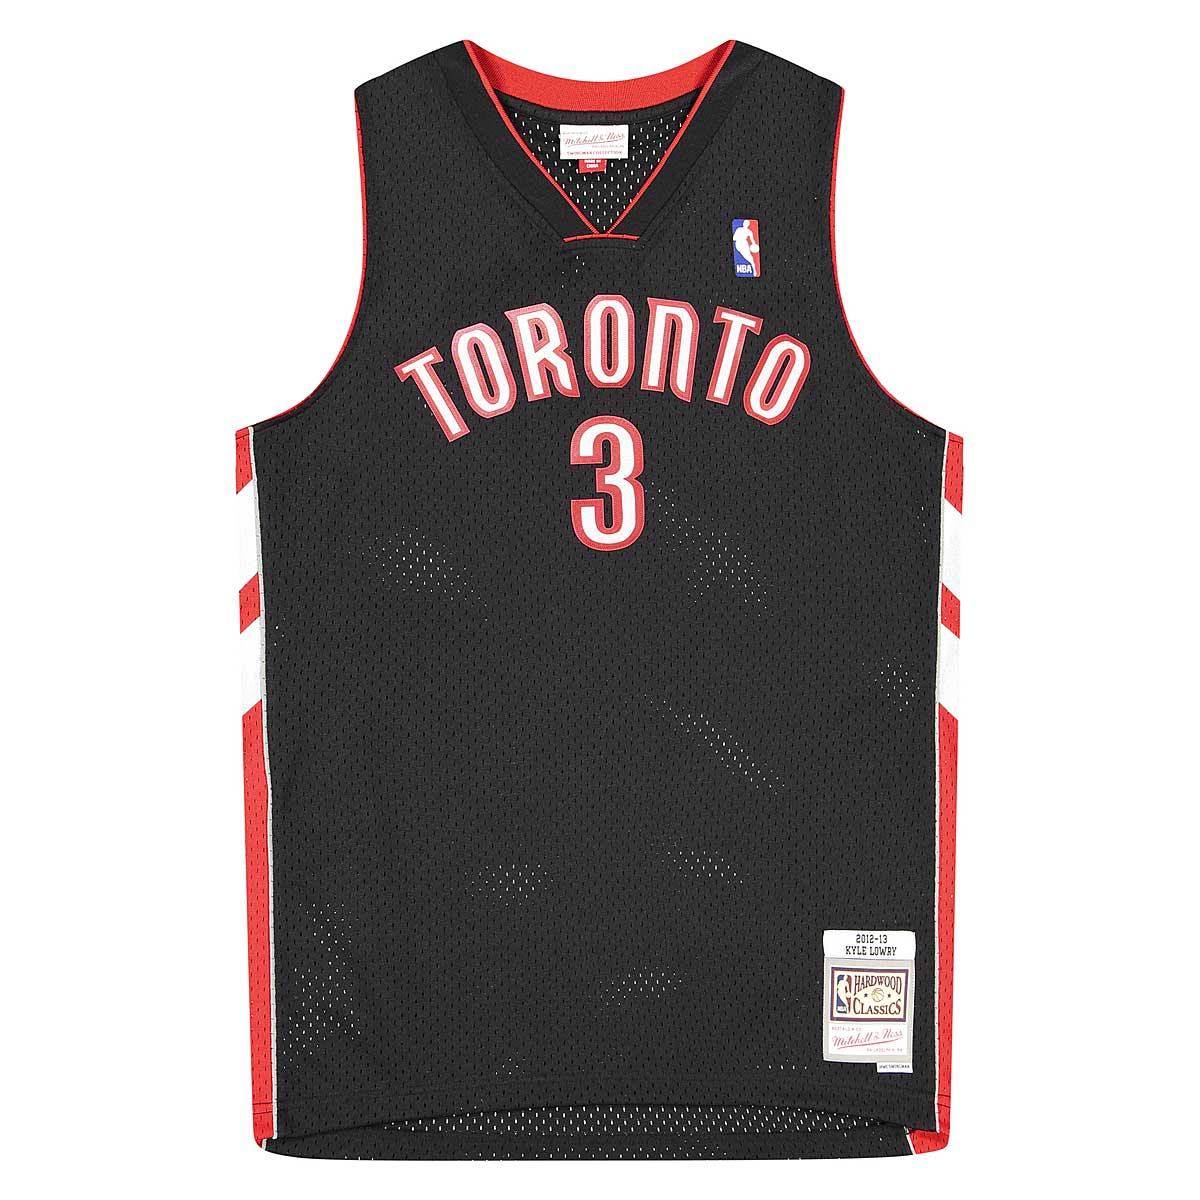 NBA Adidas LOWRY Toronto Raptors Jersey Black & Gold Adult S +2 Basketball